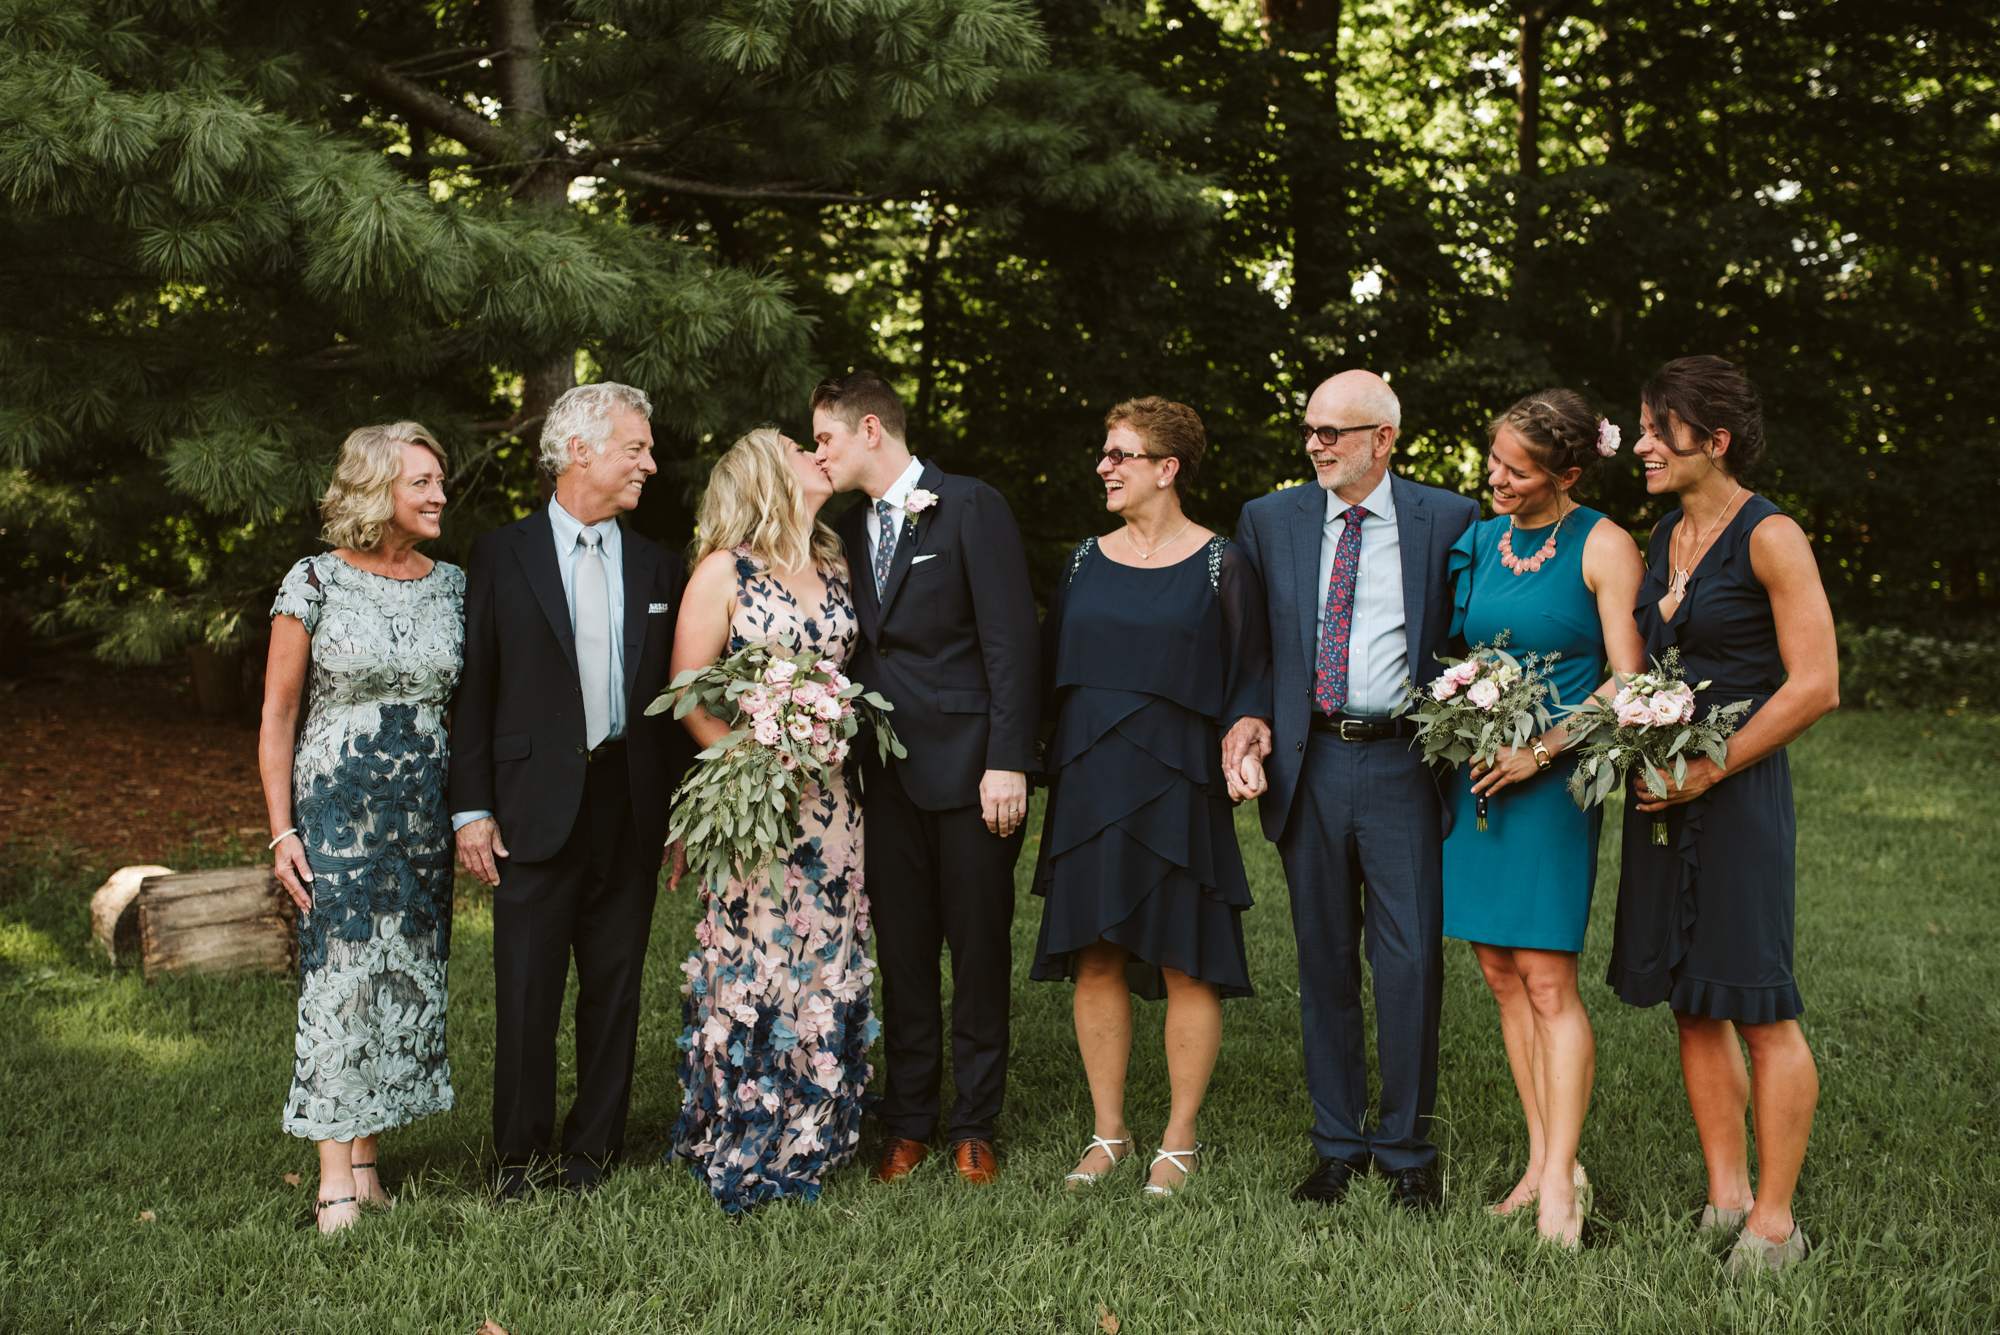 Pop-up Ceremony, Outdoor Wedding, Casual, Simple, Lake Roland, Baltimore, Maryland Wedding Photographer, Laid Back, DIY Flowers, September Wedding, Family Portrait